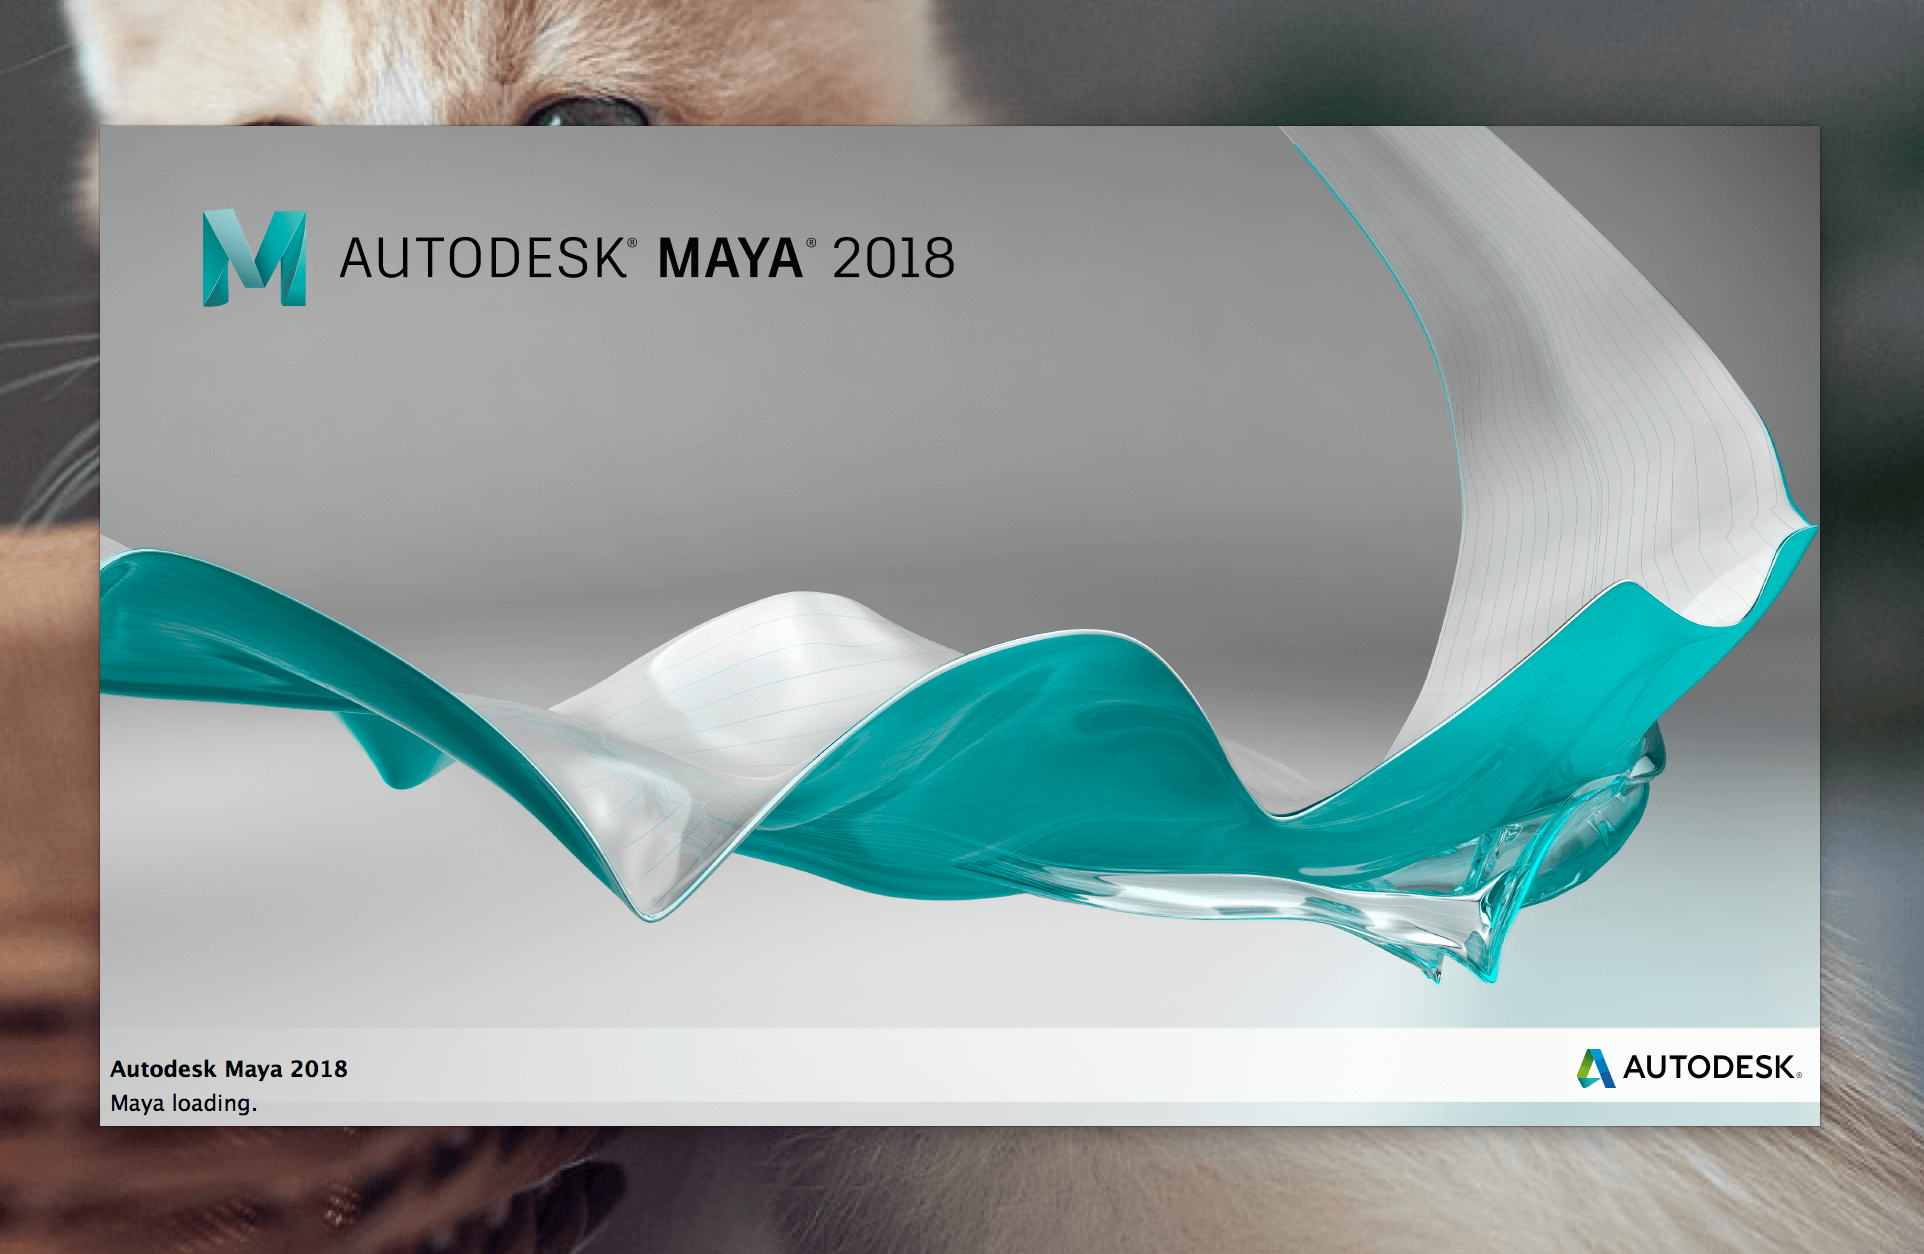 Autodesk Maya 2022 MAC